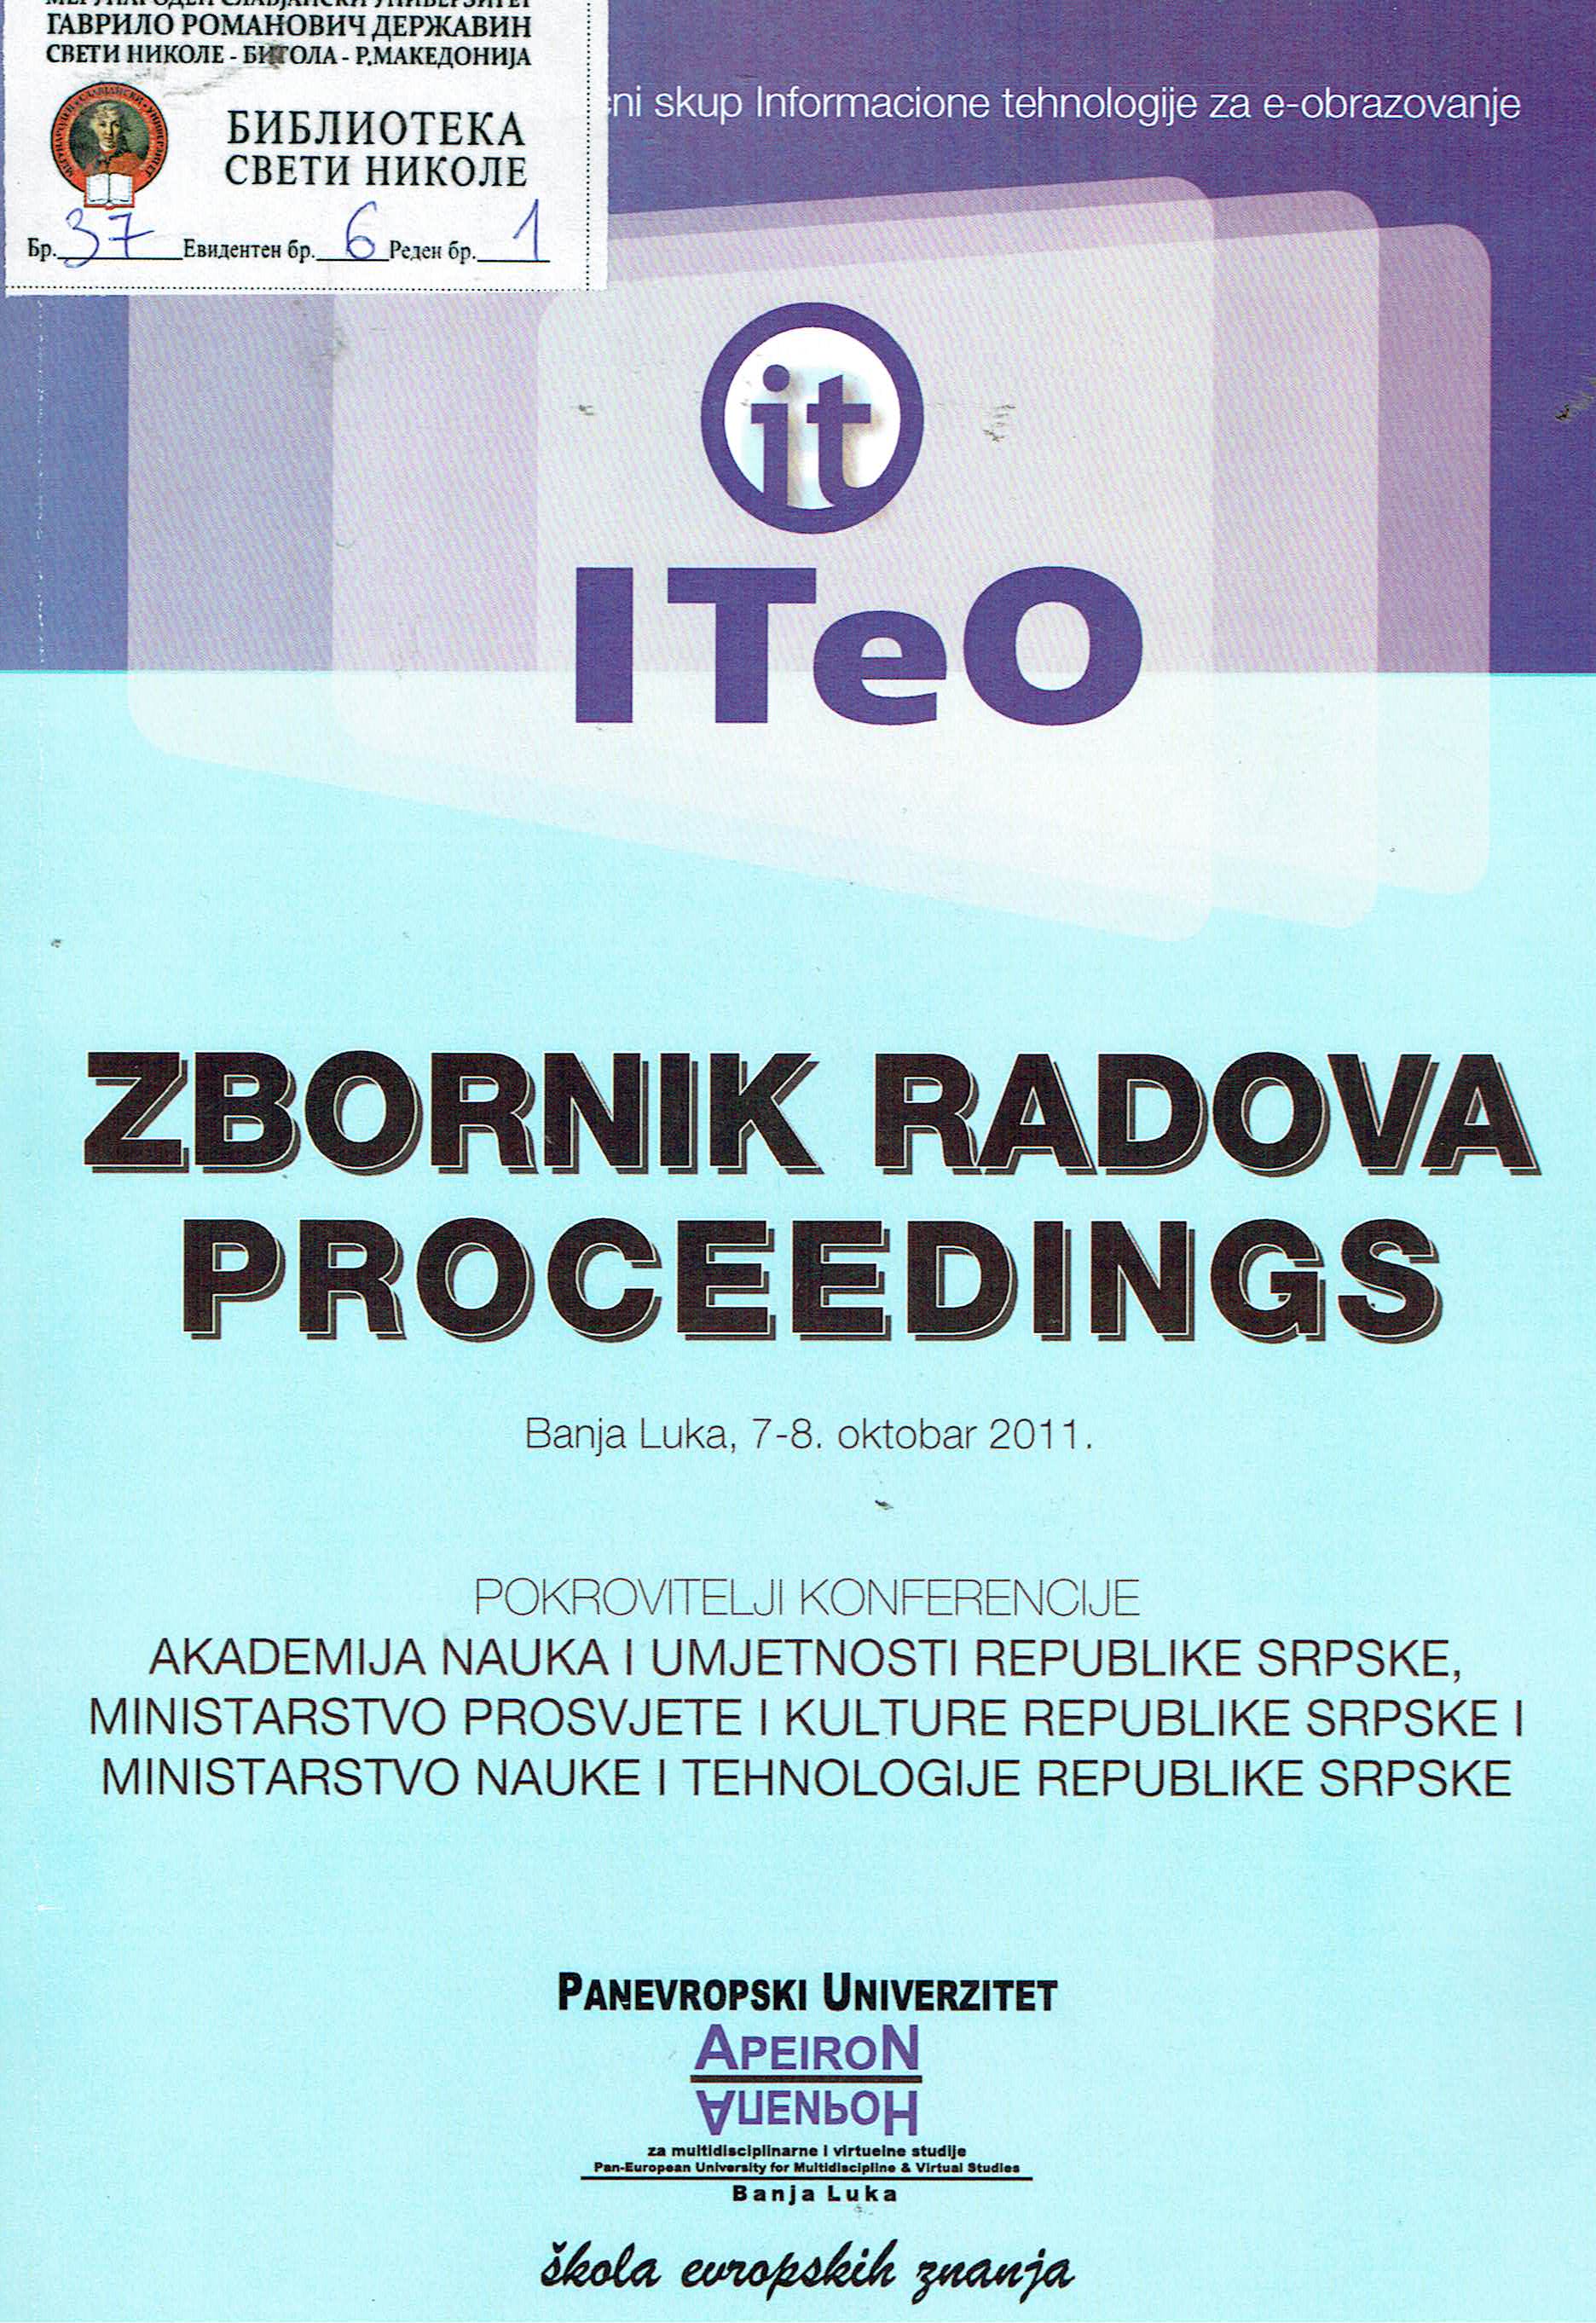 Zbornik radova proceedings